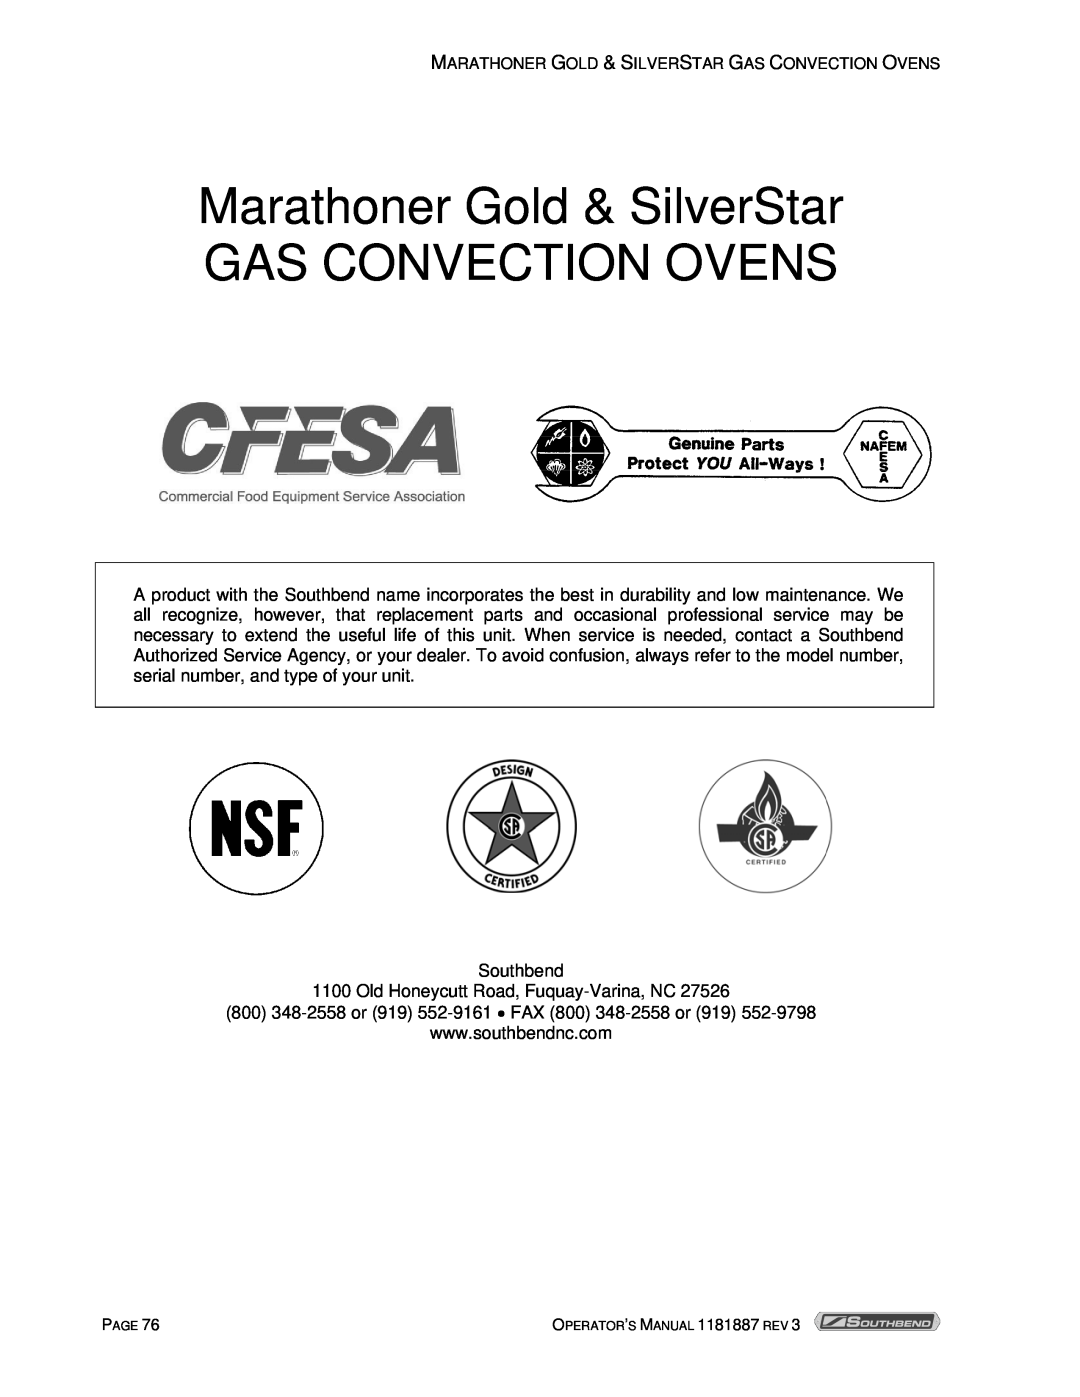 Southbend manual Marathoner Gold & SilverStar GAS CONVECTION OVENS 